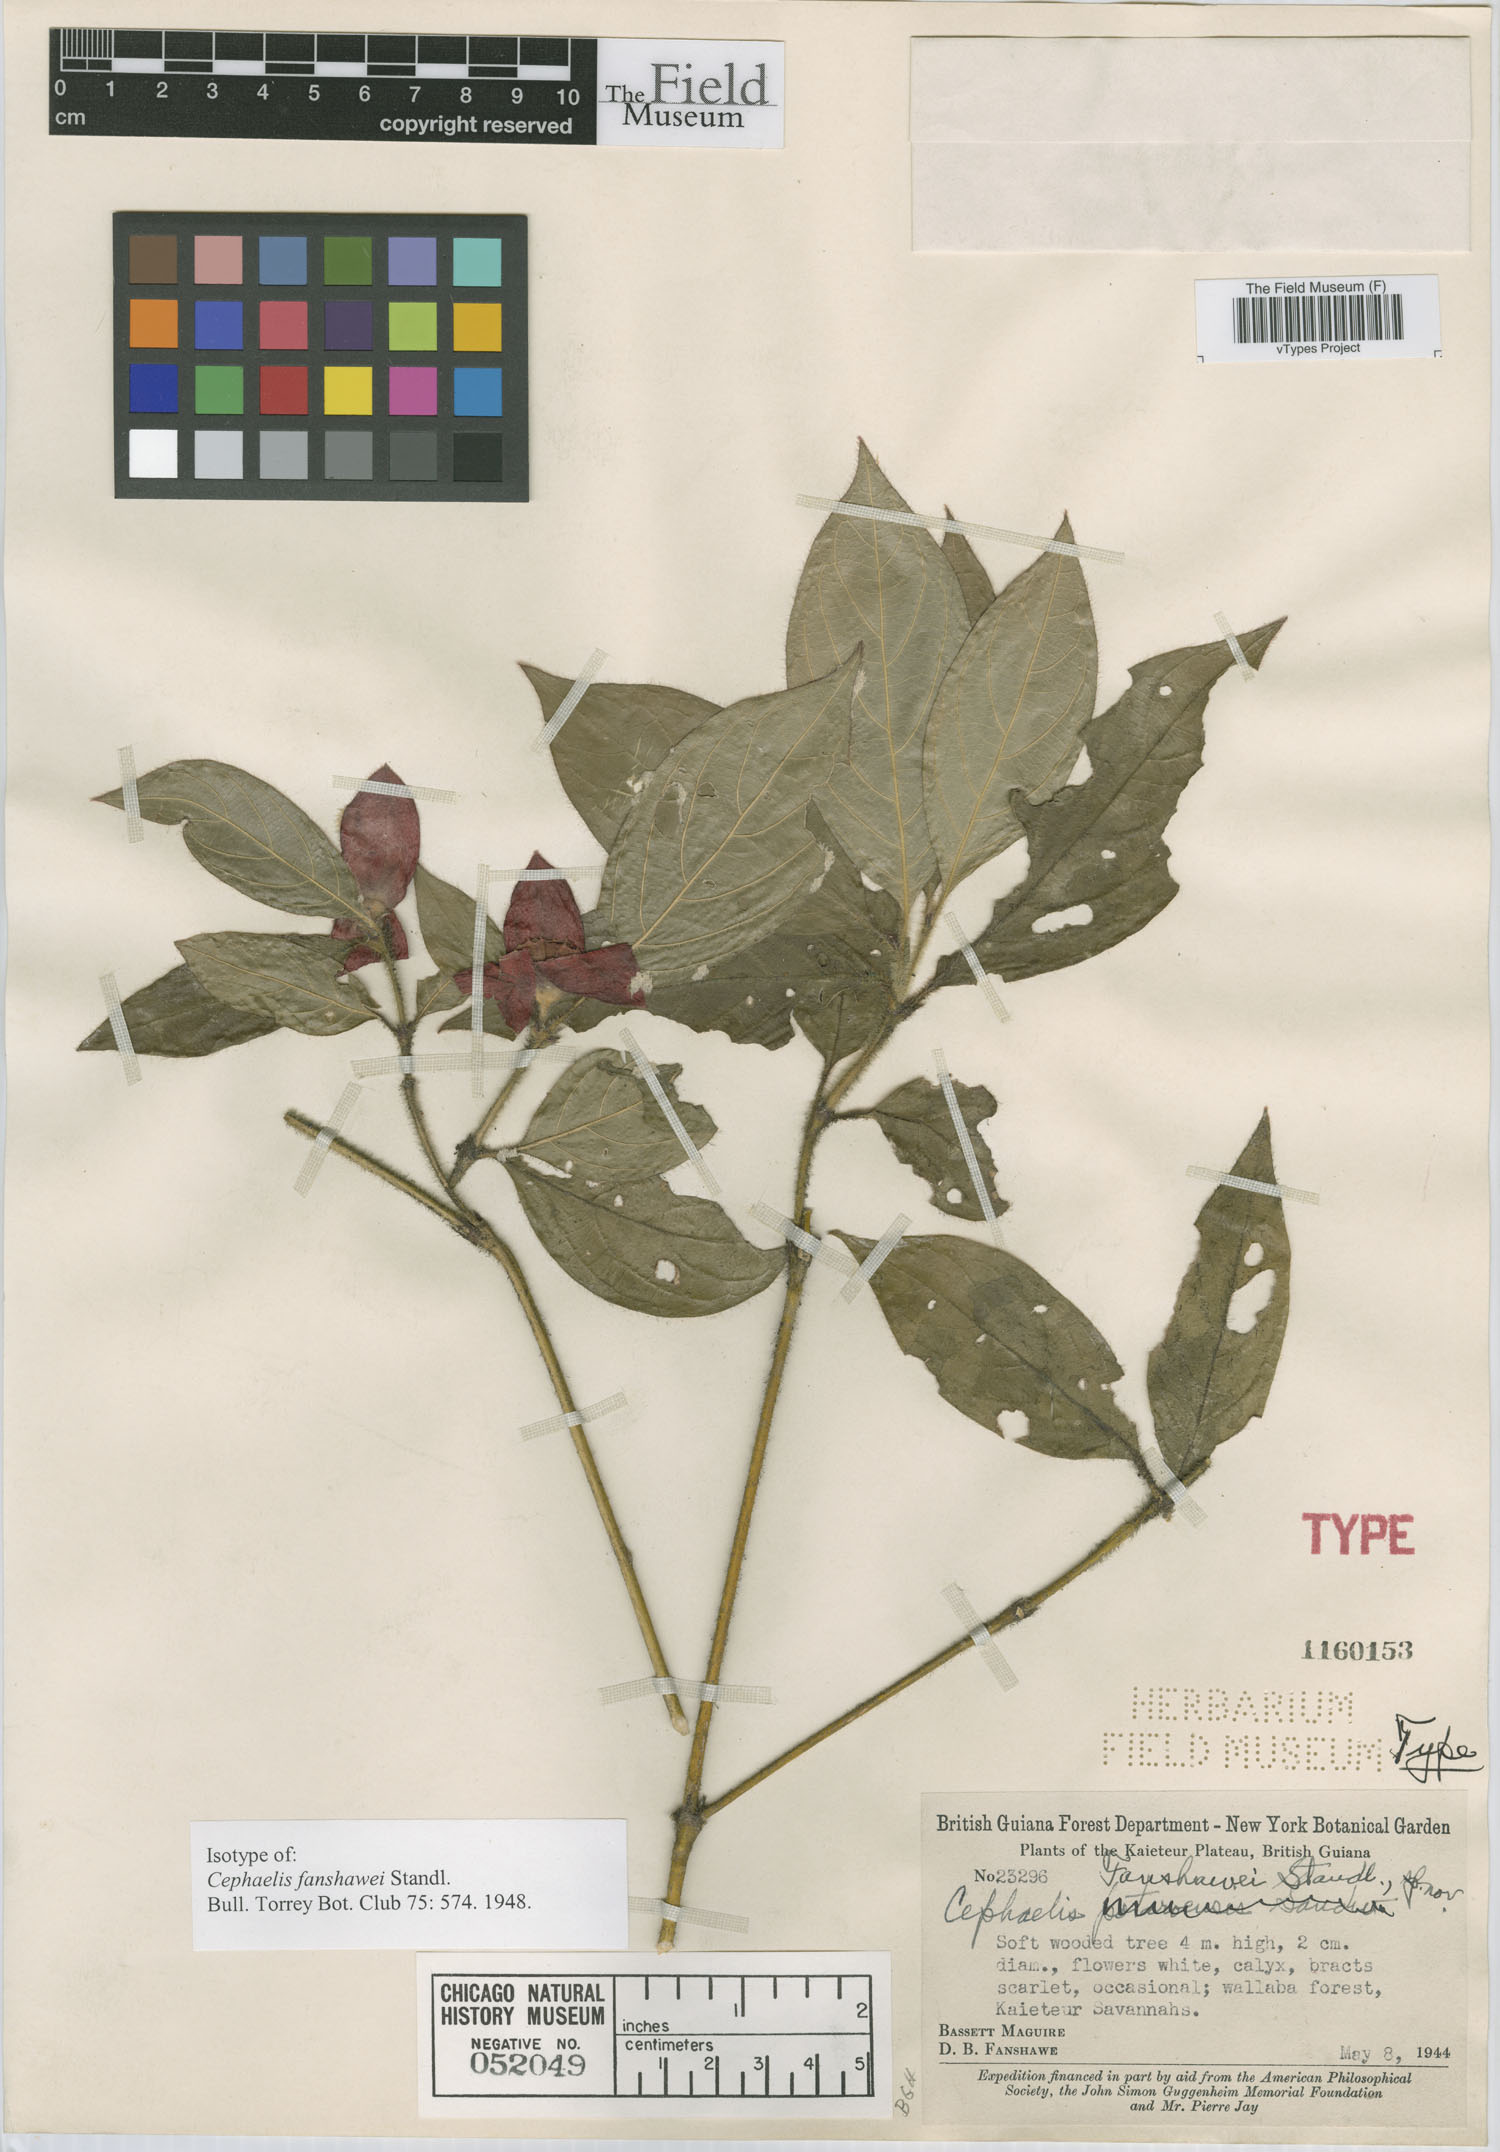 Psychotria fanshawei image